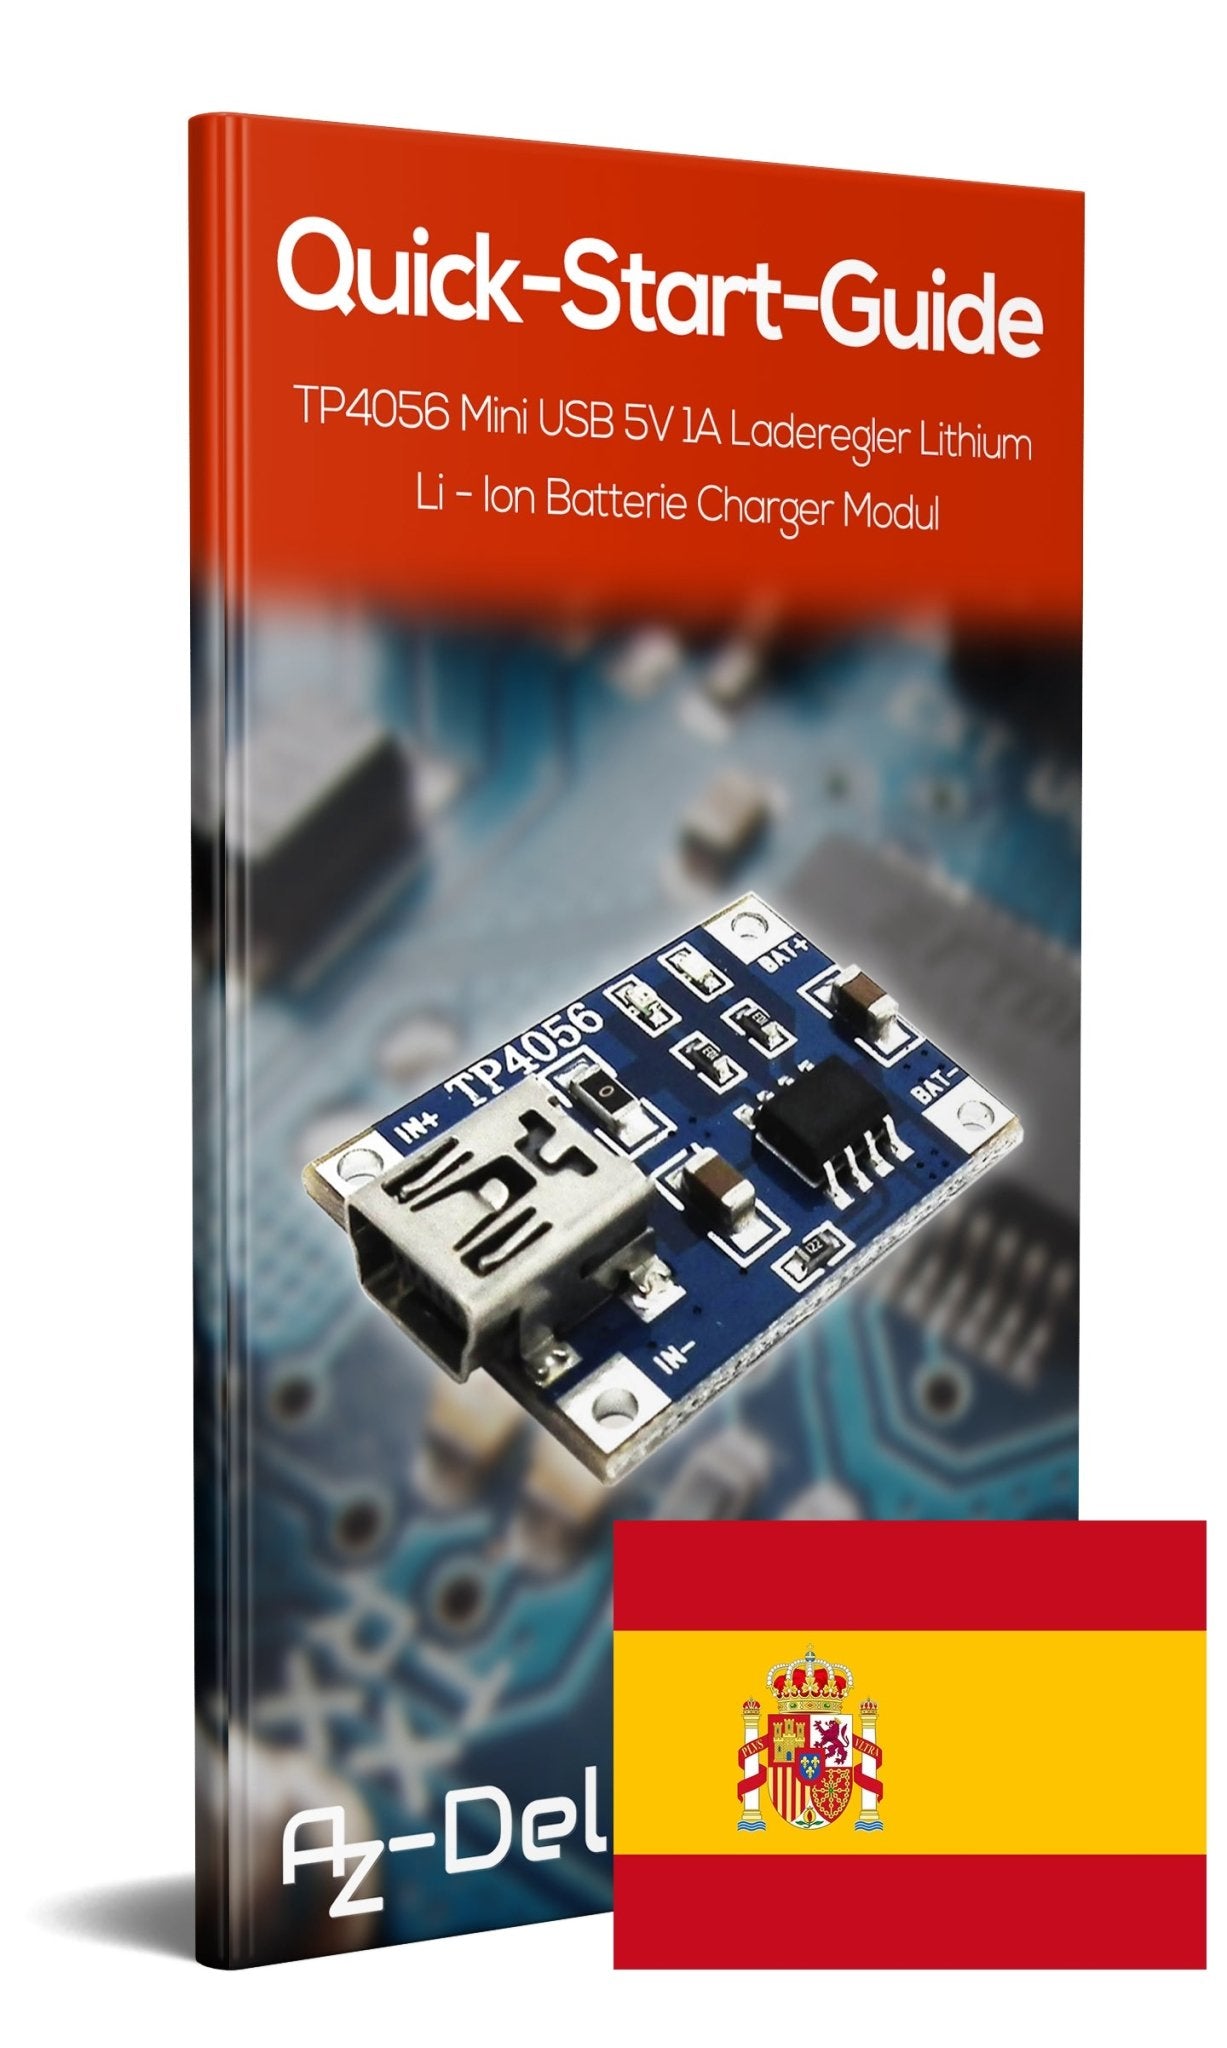 TP4056 Mini USB 5V 1A Laderegler Lithium Li - Ion Batterie Charger Modul - AZ-Delivery